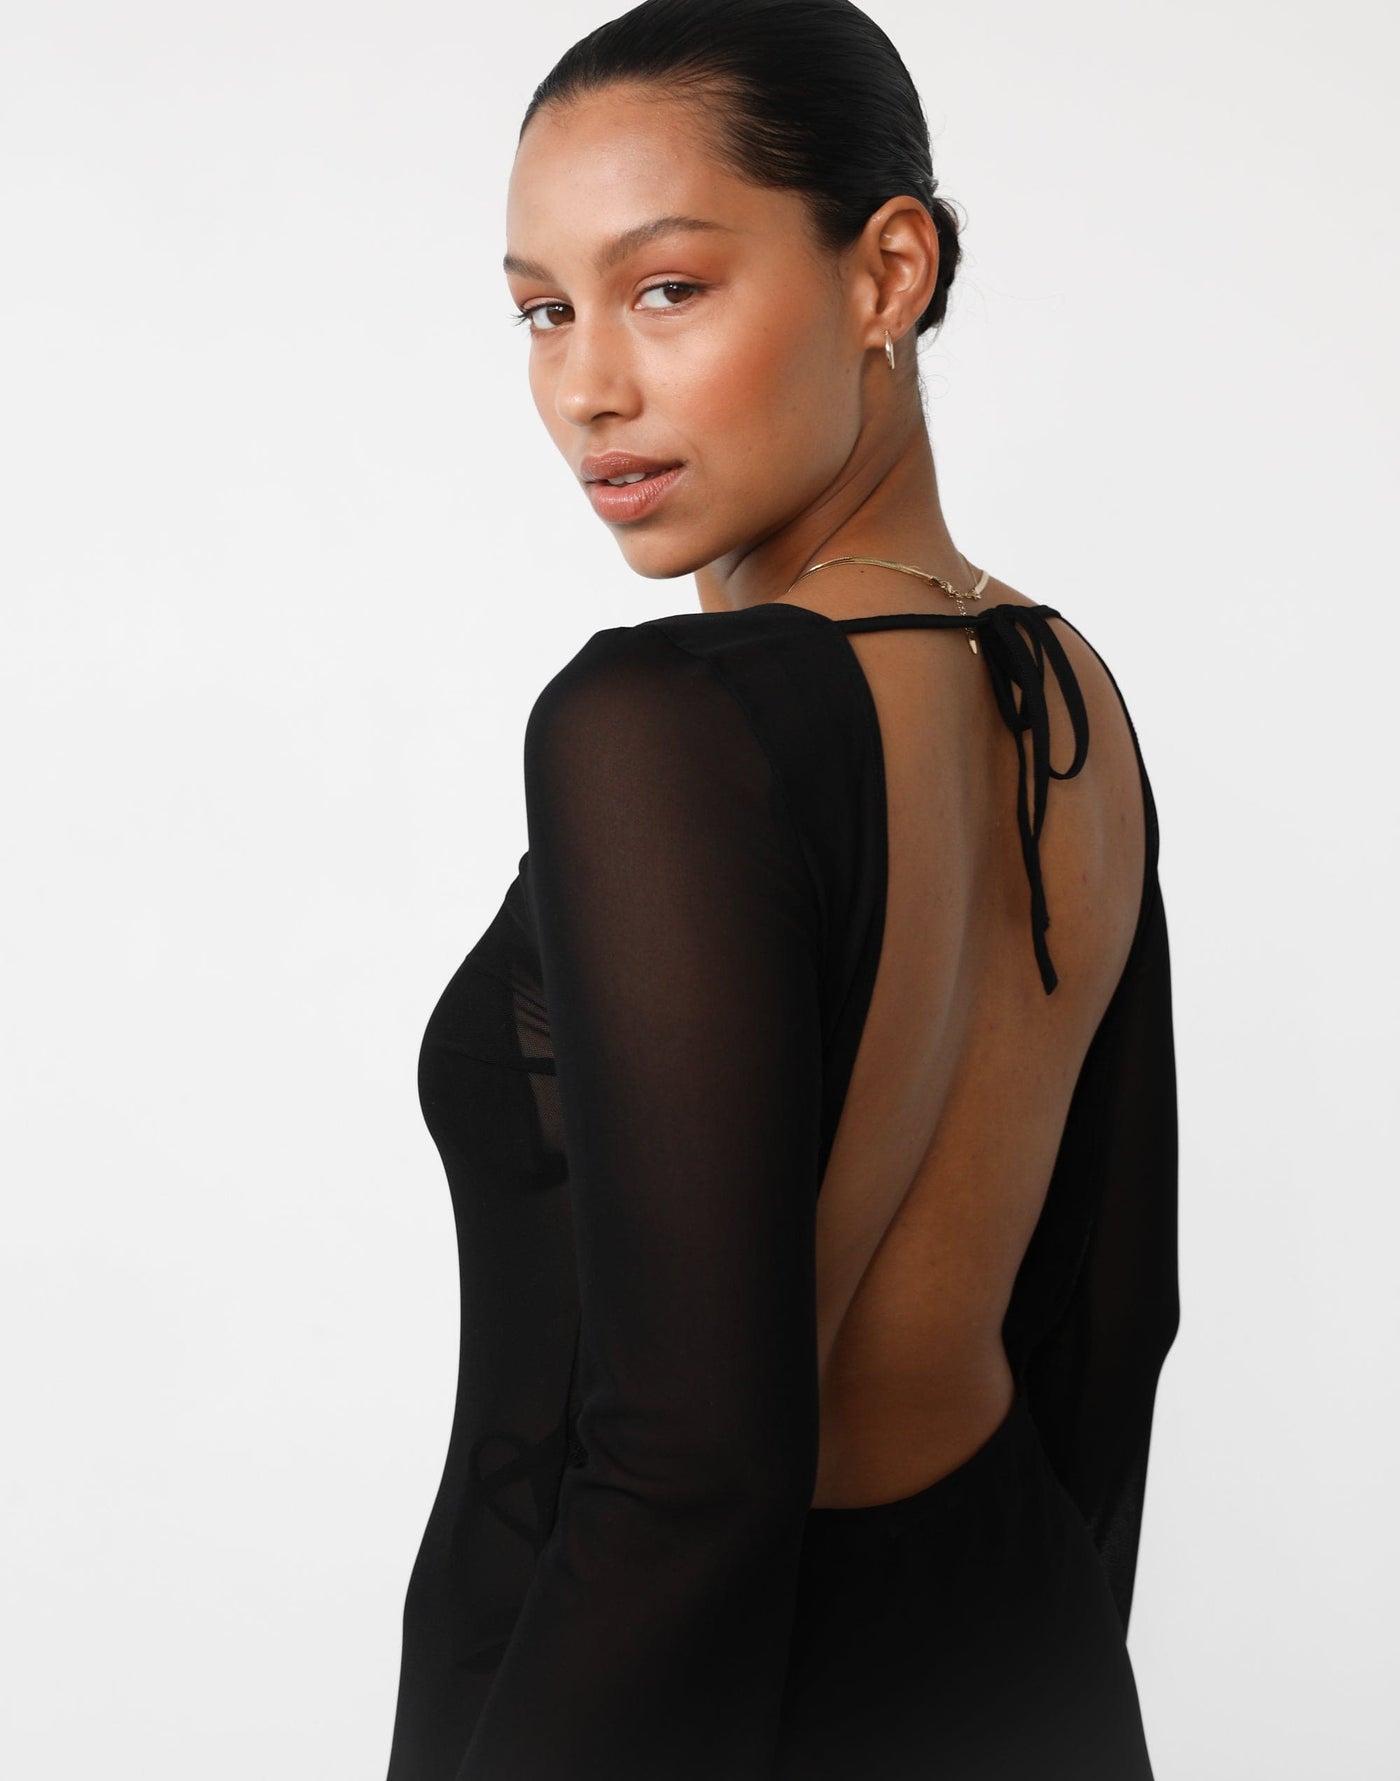 Make Waves Mini Dress (Black) - Sheer Open Back Dress - Women's Dress - Charcoal Clothing